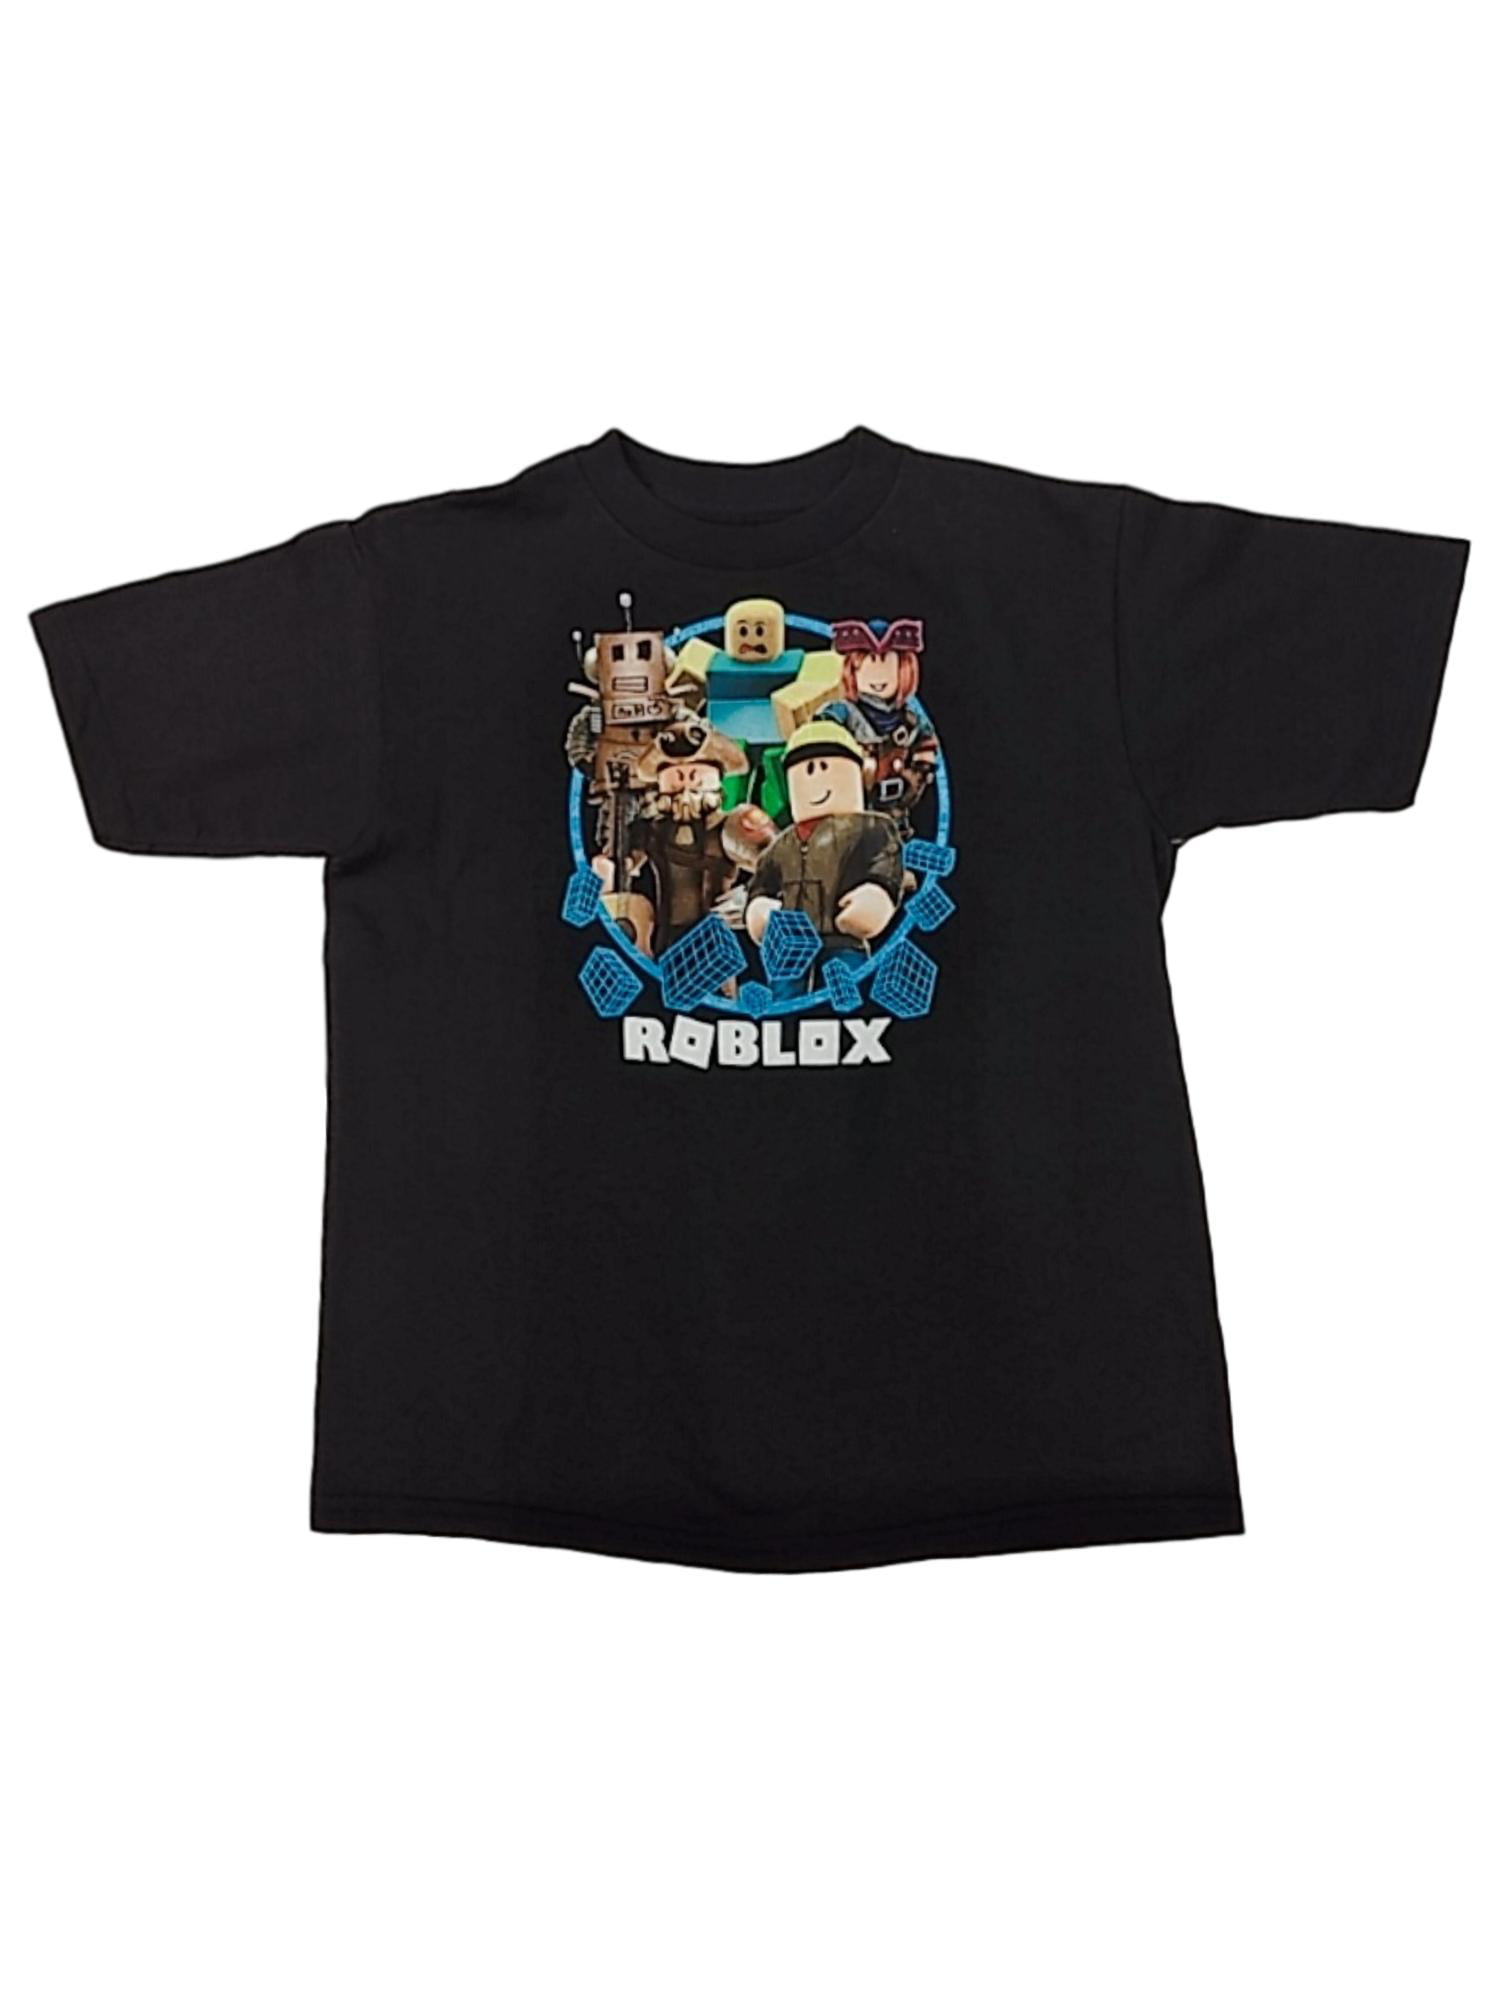 Boys Black Roblox Multi Character T Shirt Graphic Tee Shirt Large 6 7 Walmart Com Walmart Com - cool boy roblox characters